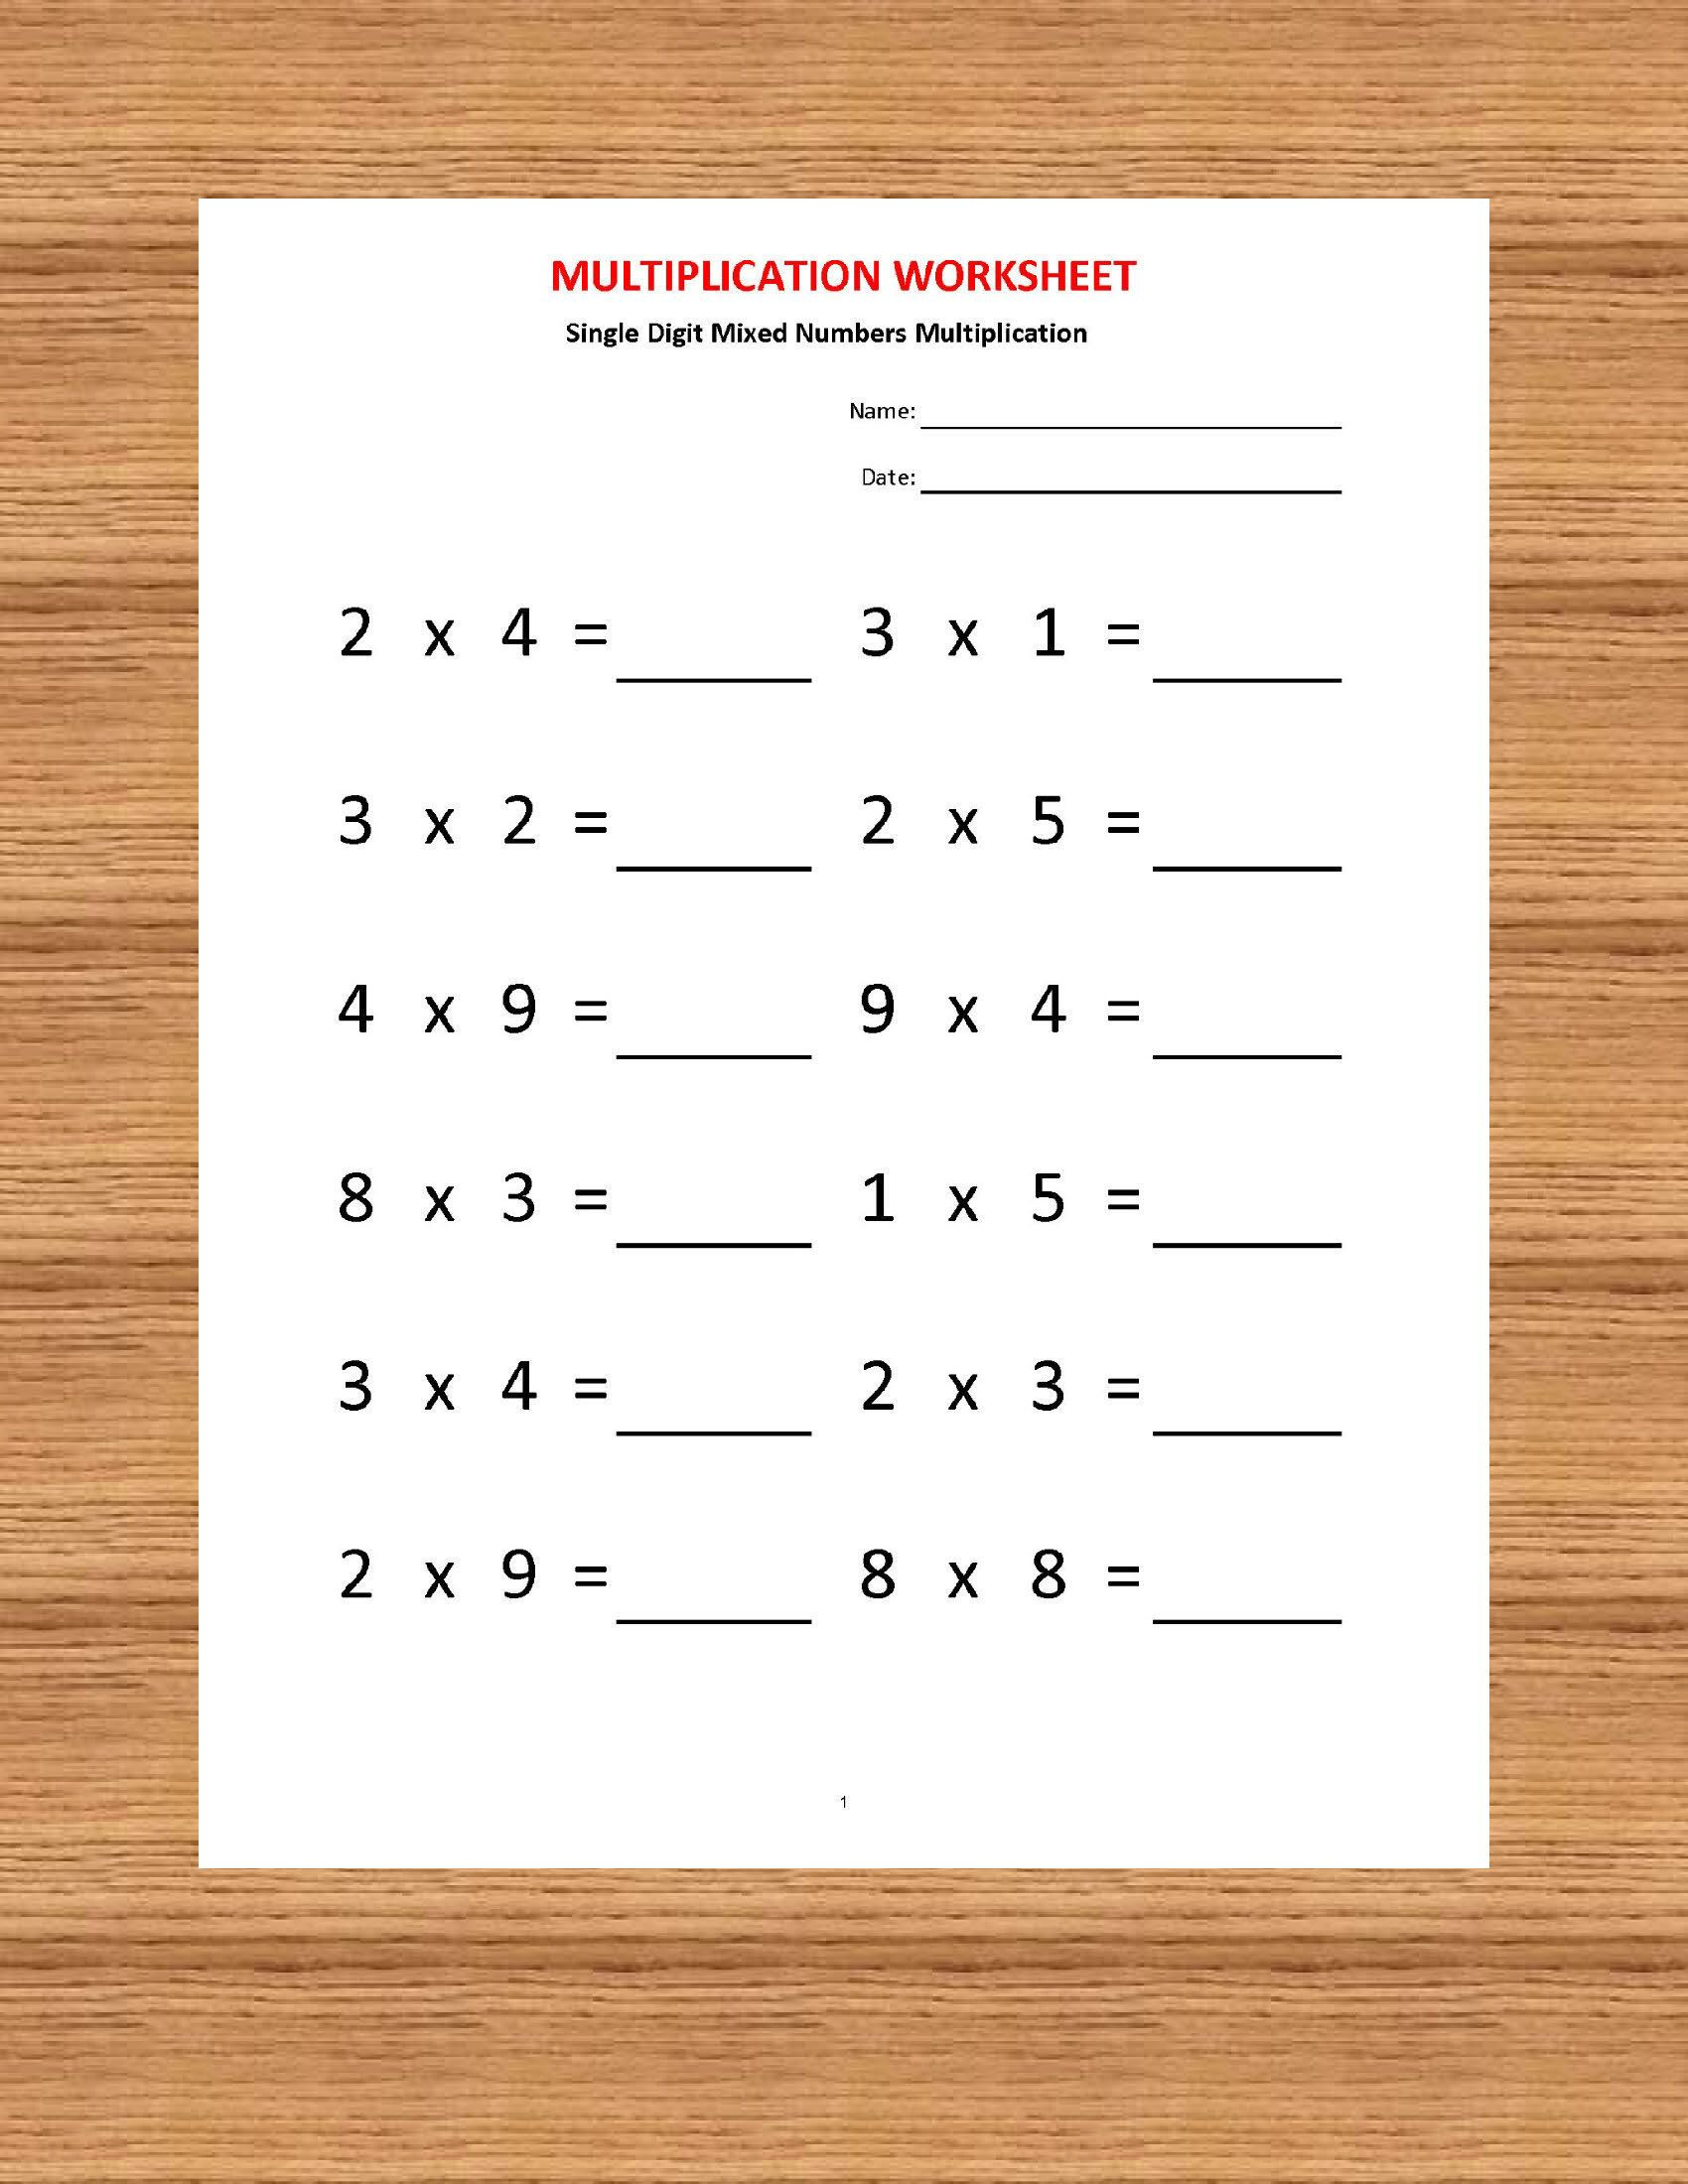 Multiplication Worksheets, Printable Worksheets regarding Multiplication Worksheets Year 2